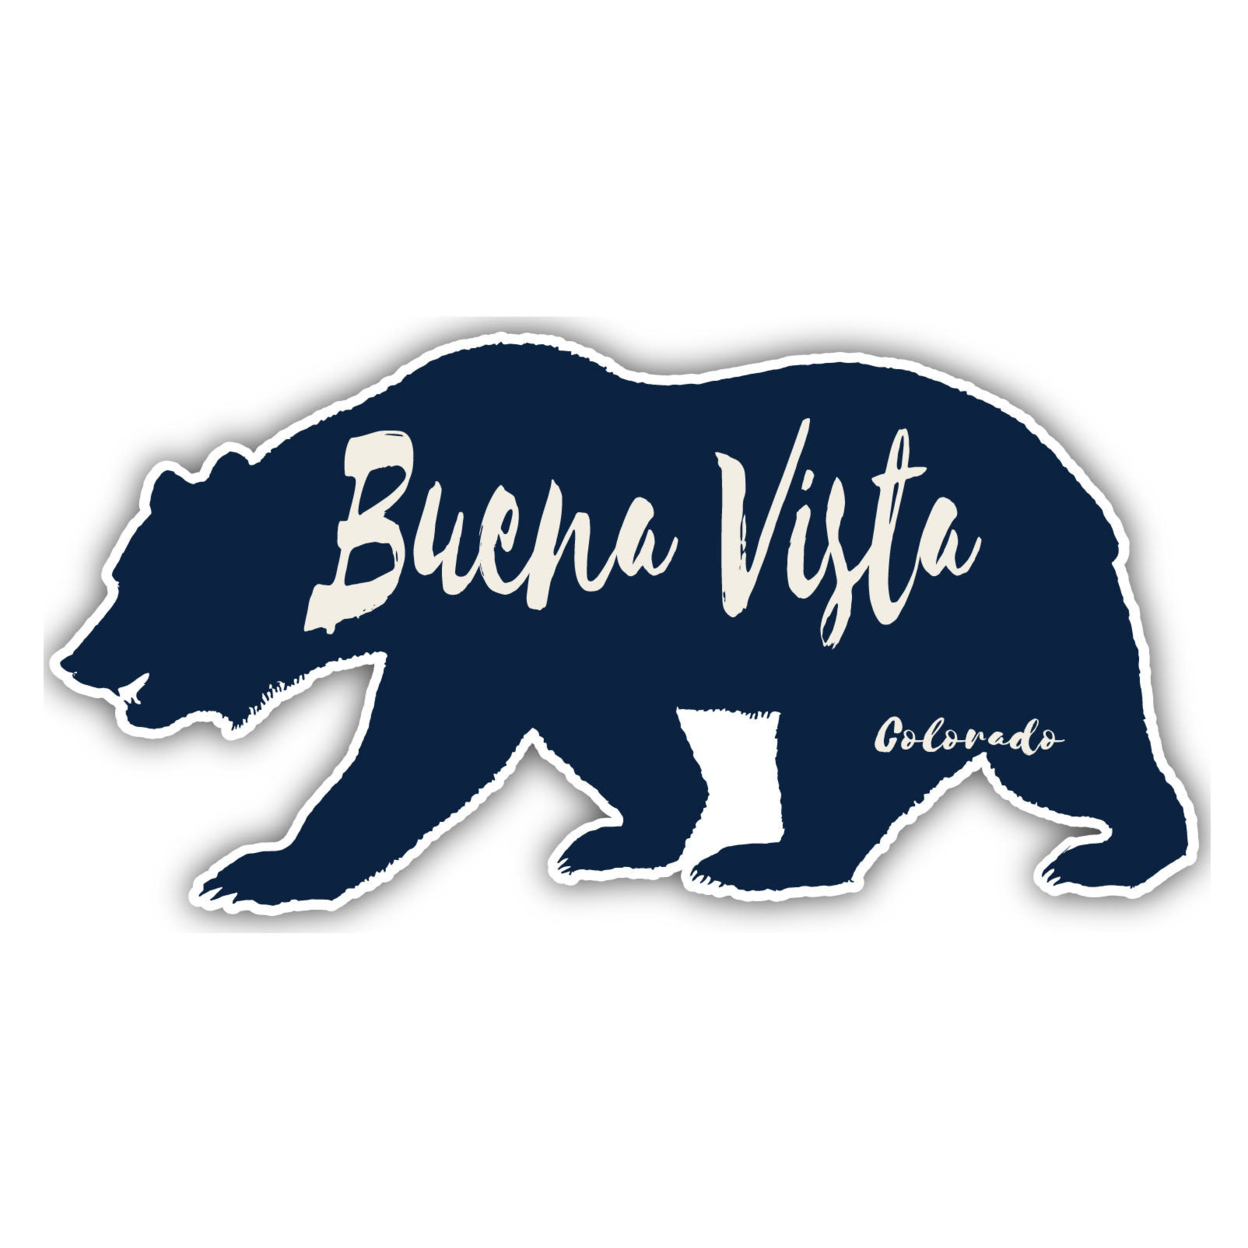 Buena Vista Colorado Souvenir Decorative Stickers (Choose Theme And Size) - 4-Pack, 2-Inch, Bear